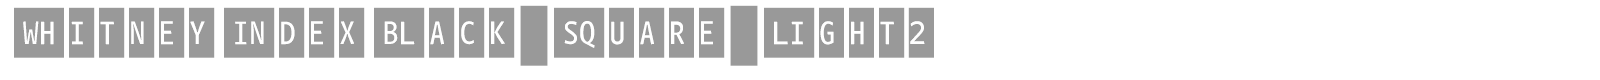 WhitneyIndexBlack-Square-Light2 font preview